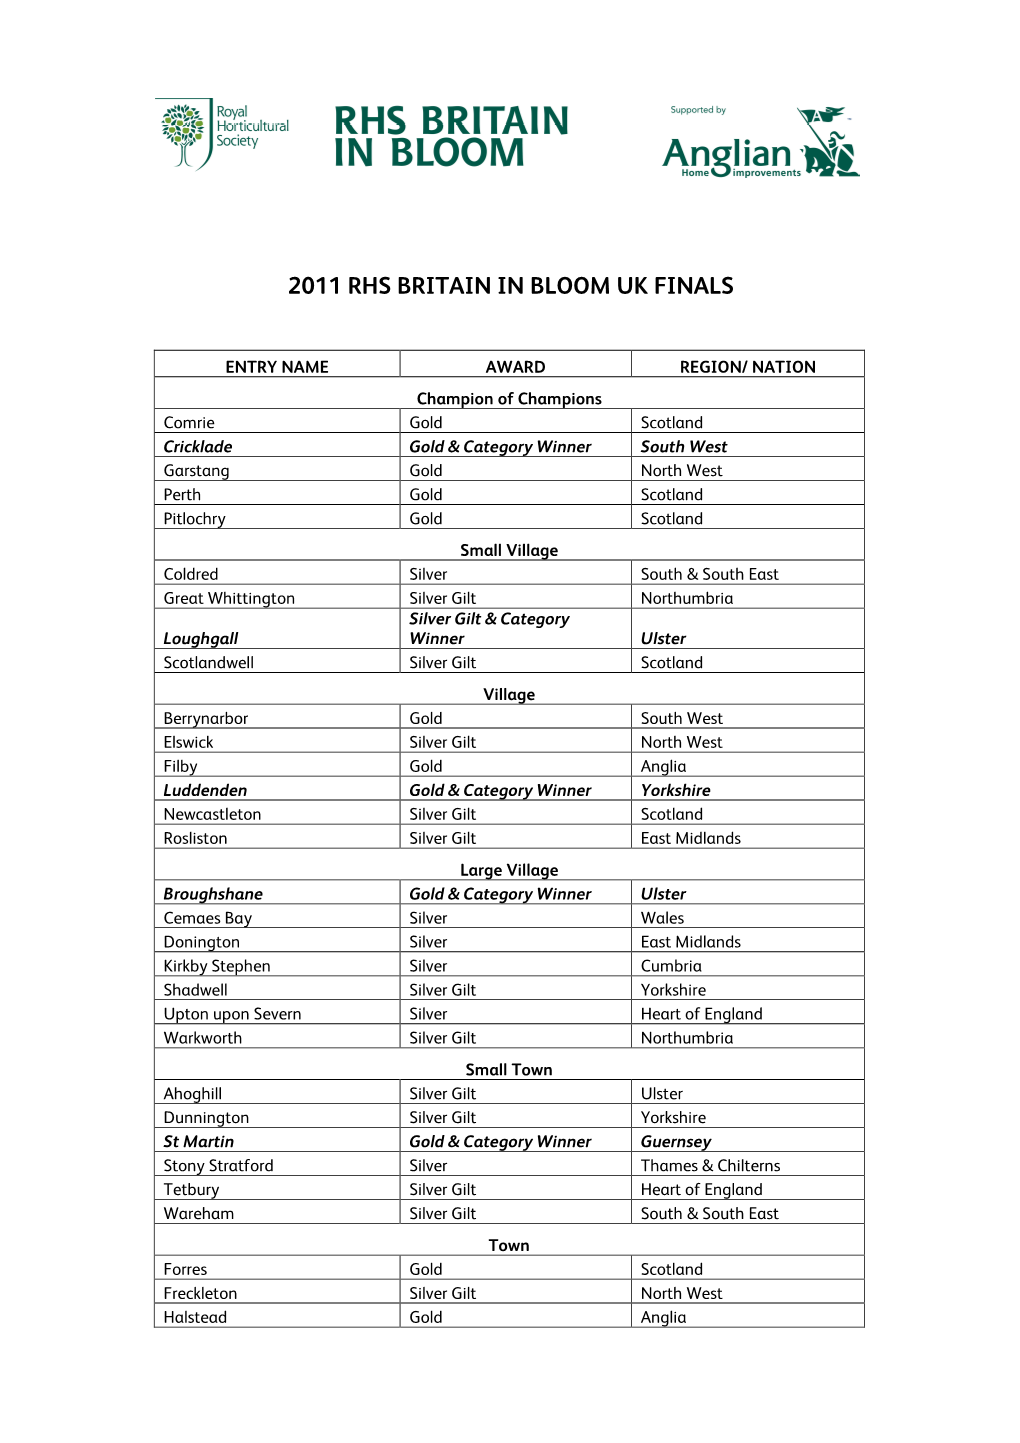 2011 RHS Britain in Bloom UK Finals (Results)